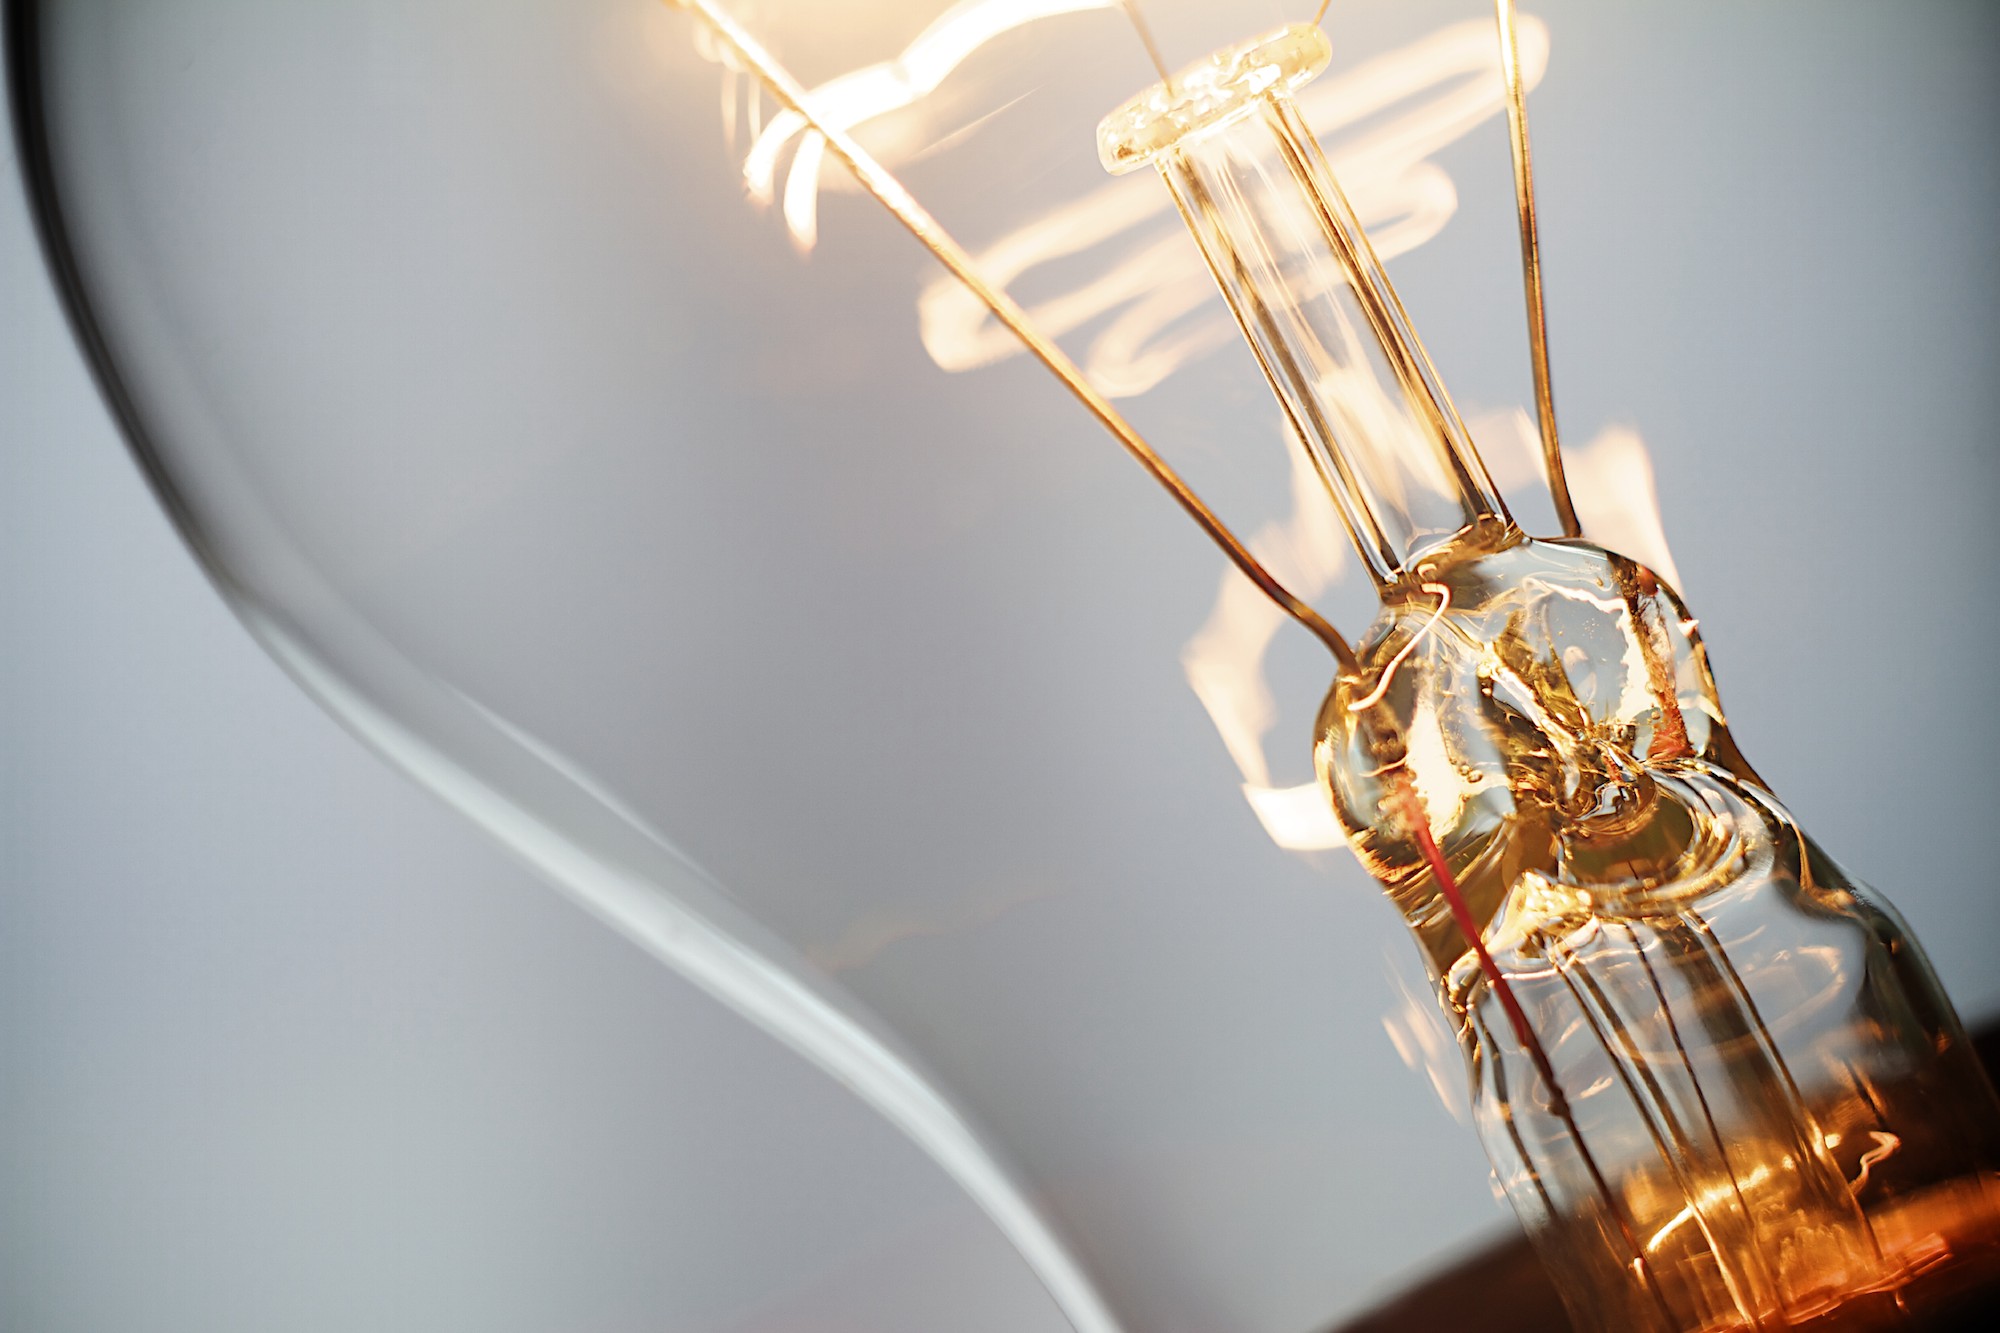 The Lightbulb - simple ideas, shine brightest.